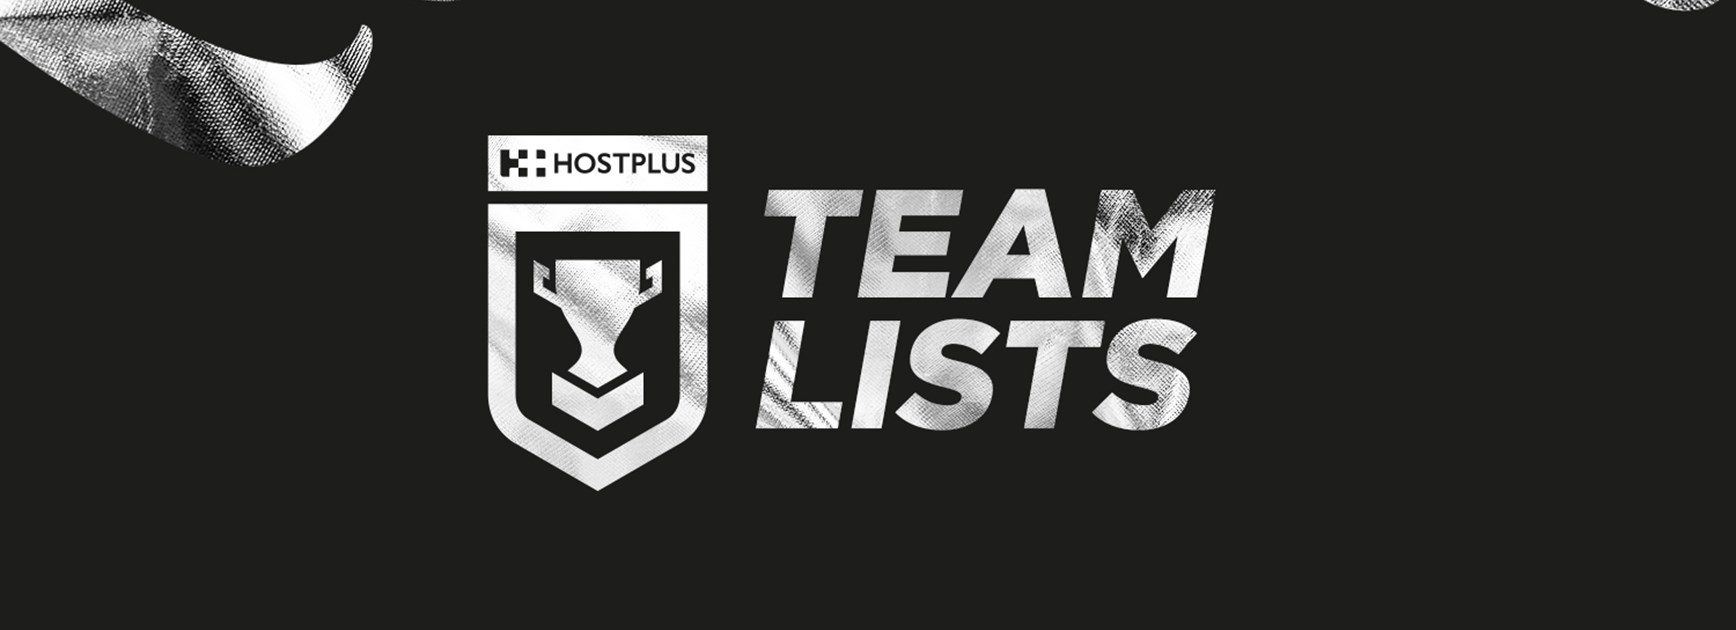 Round 3 Hostplus Cup team lists